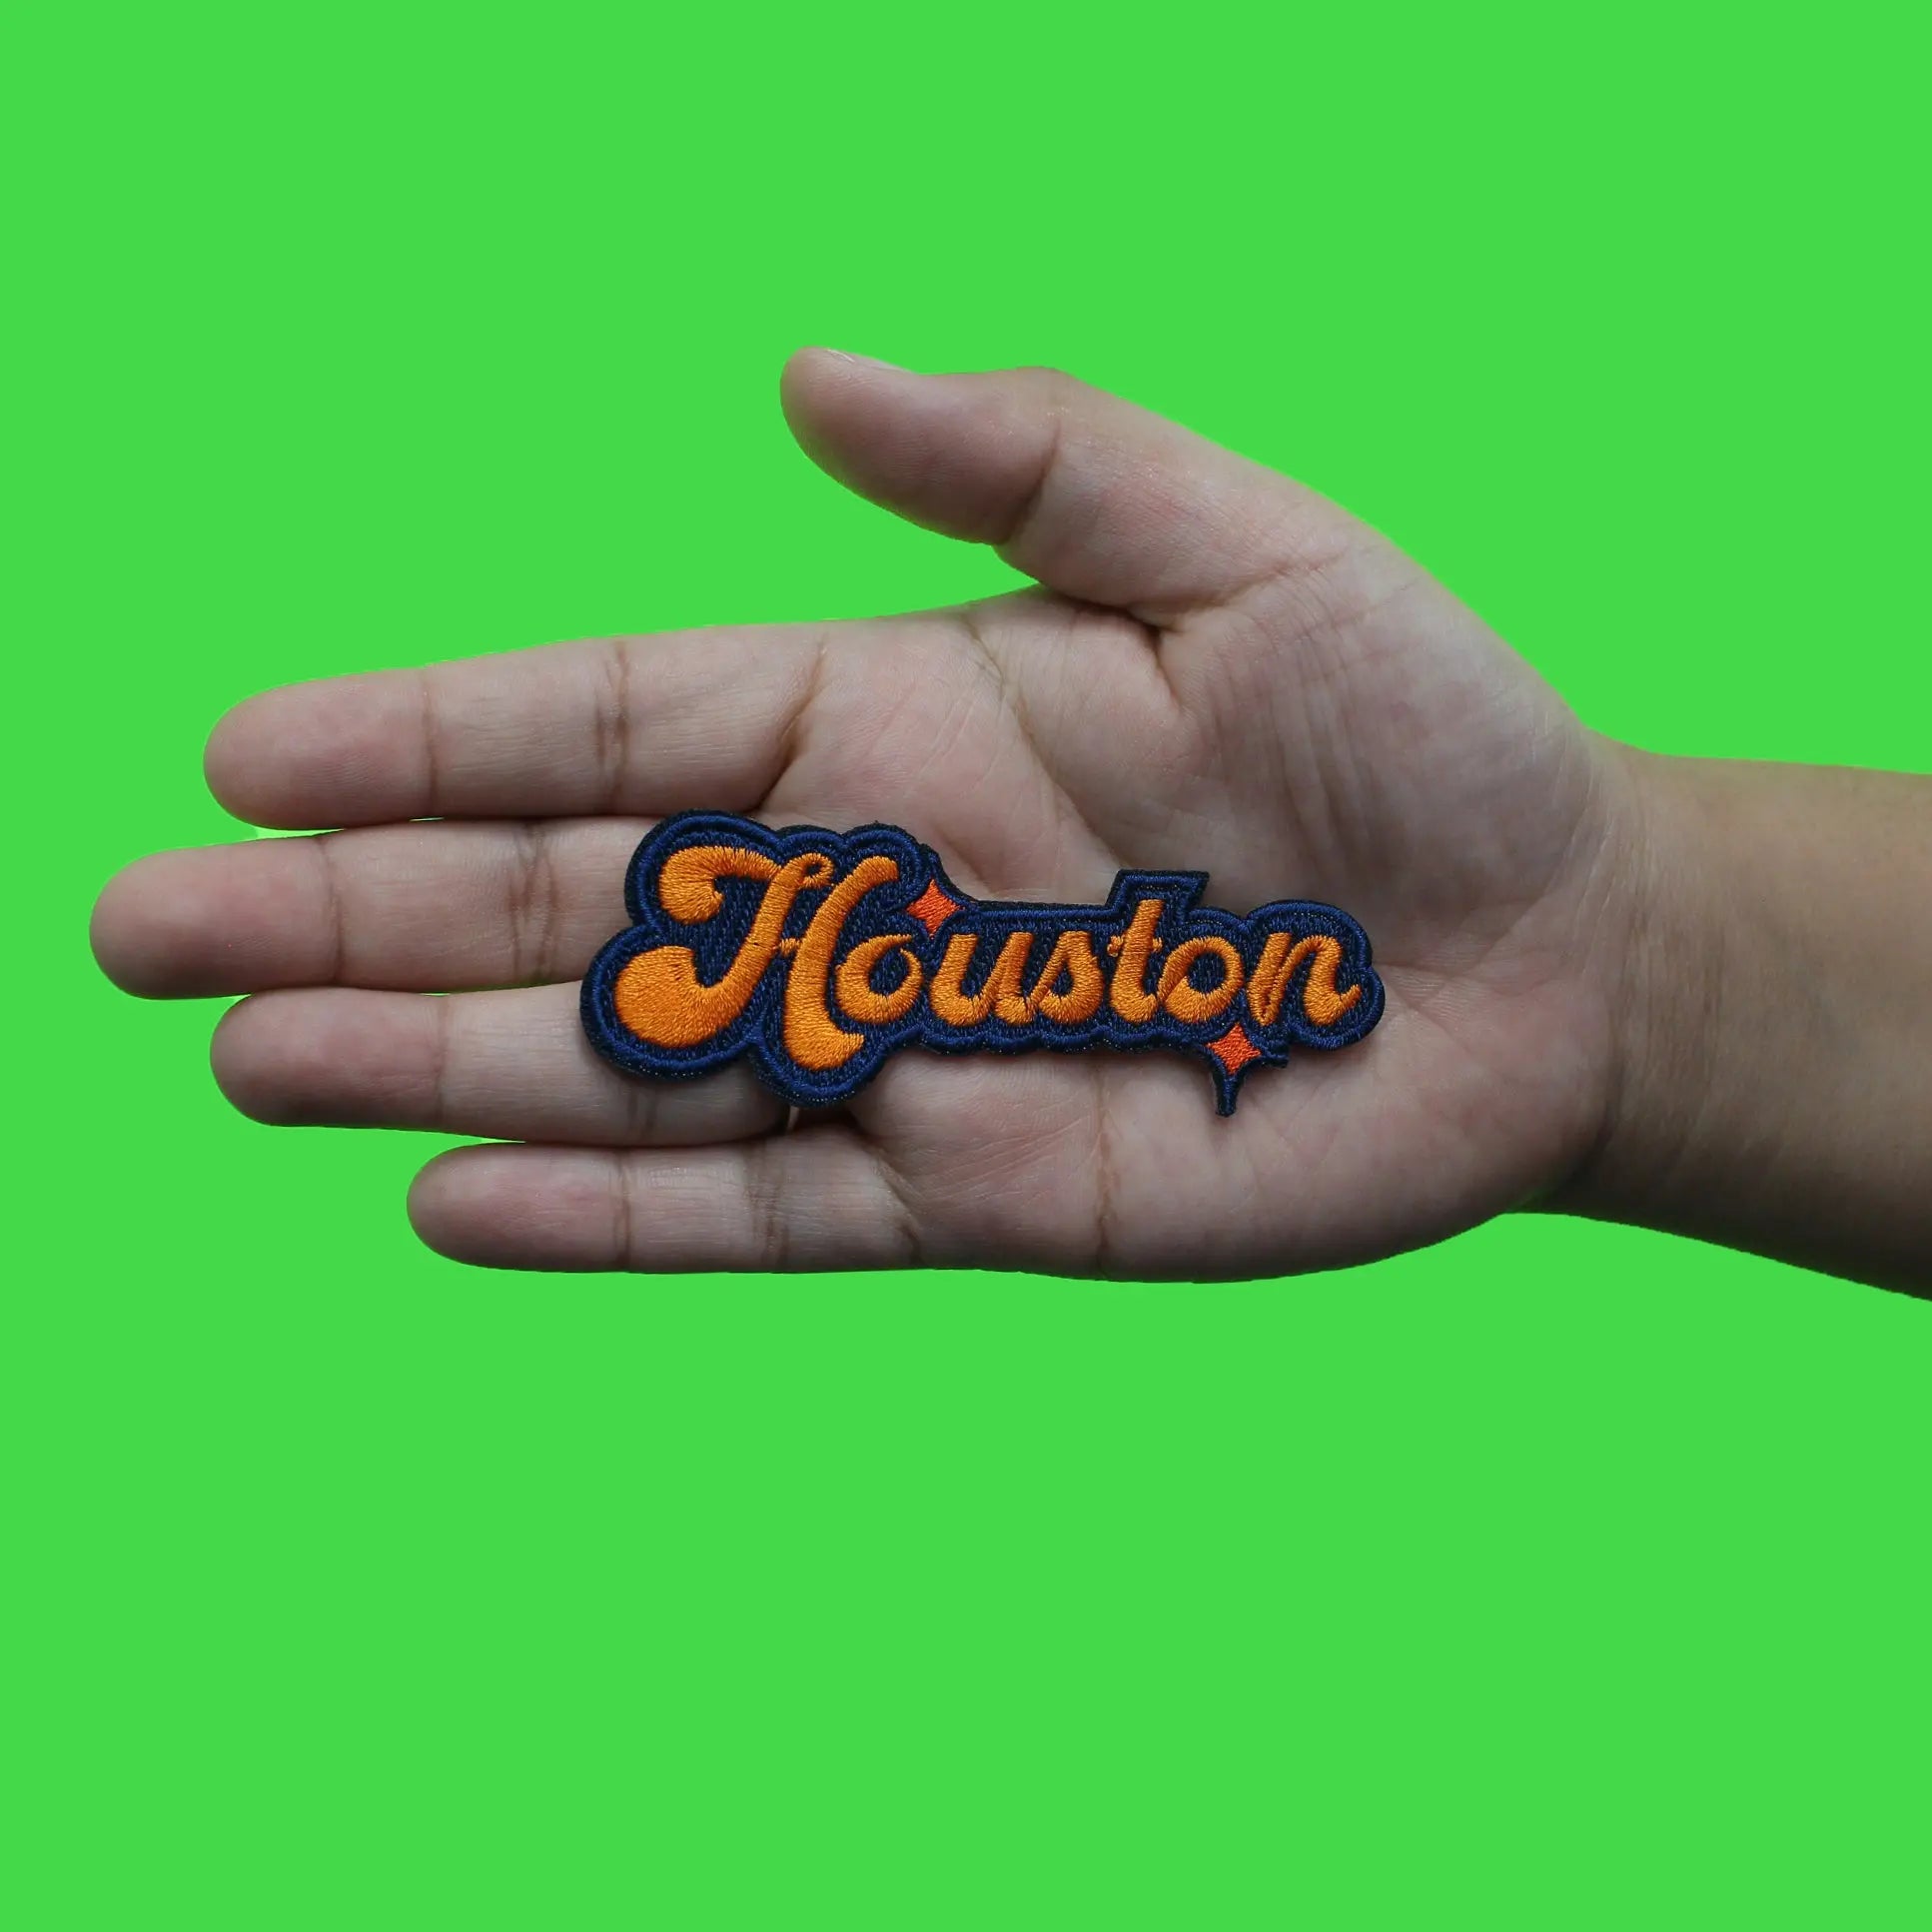 Houston Sparkle Script Patch Navy/Orange Baseball Sports Embroidered Iron On